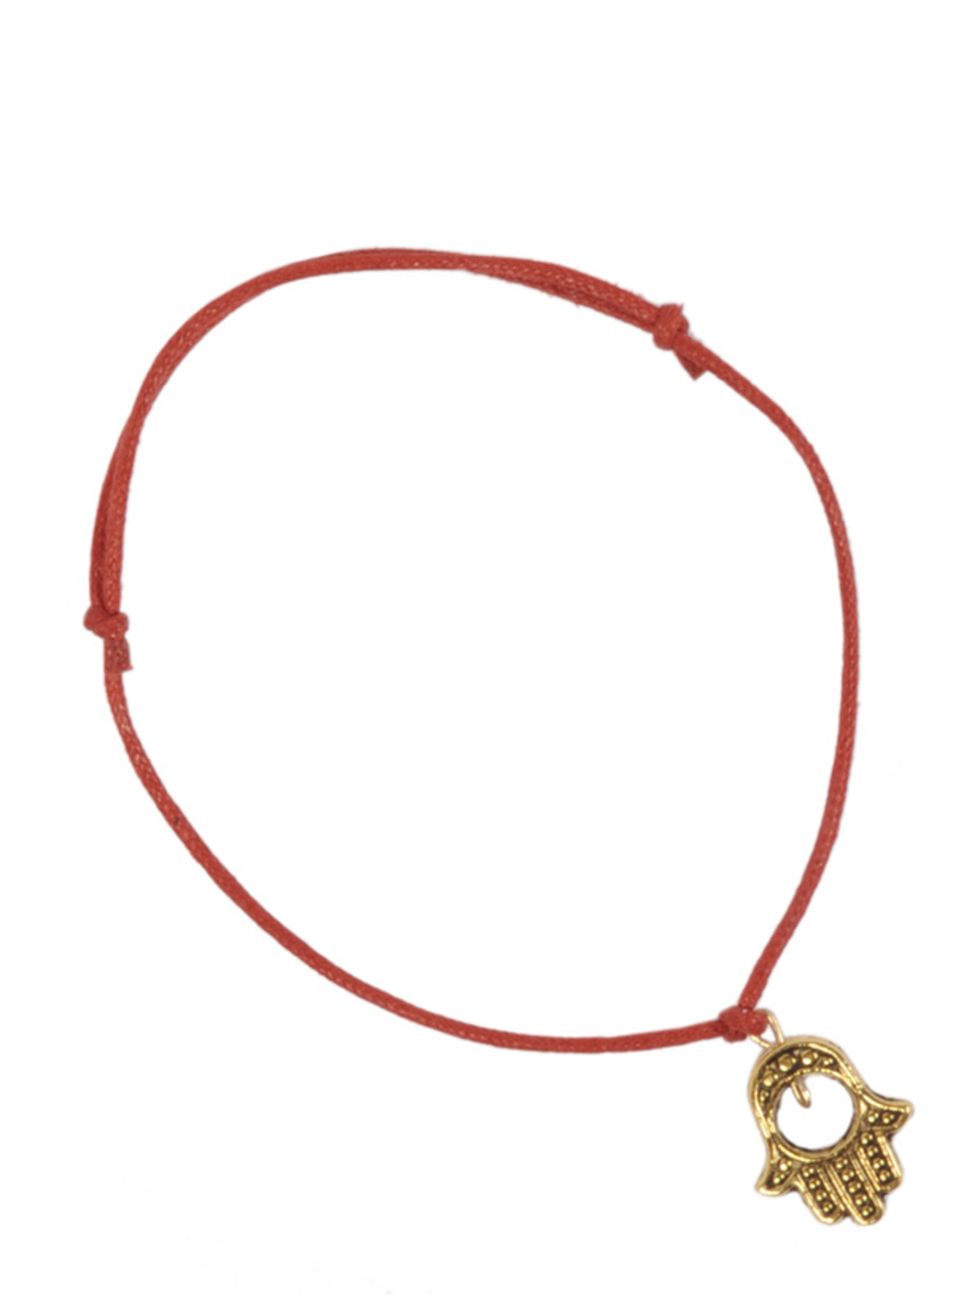 <p>Red rope bracelet with gold Hamsa charm, £7, by Kool Jewels ay <a href="http://www.pretaportobello.com/shop/jewellery/bracelets/kool-jewels-red-rope-bracelet-with-gold-hamsa.aspx">Pretaportobello</a></p>